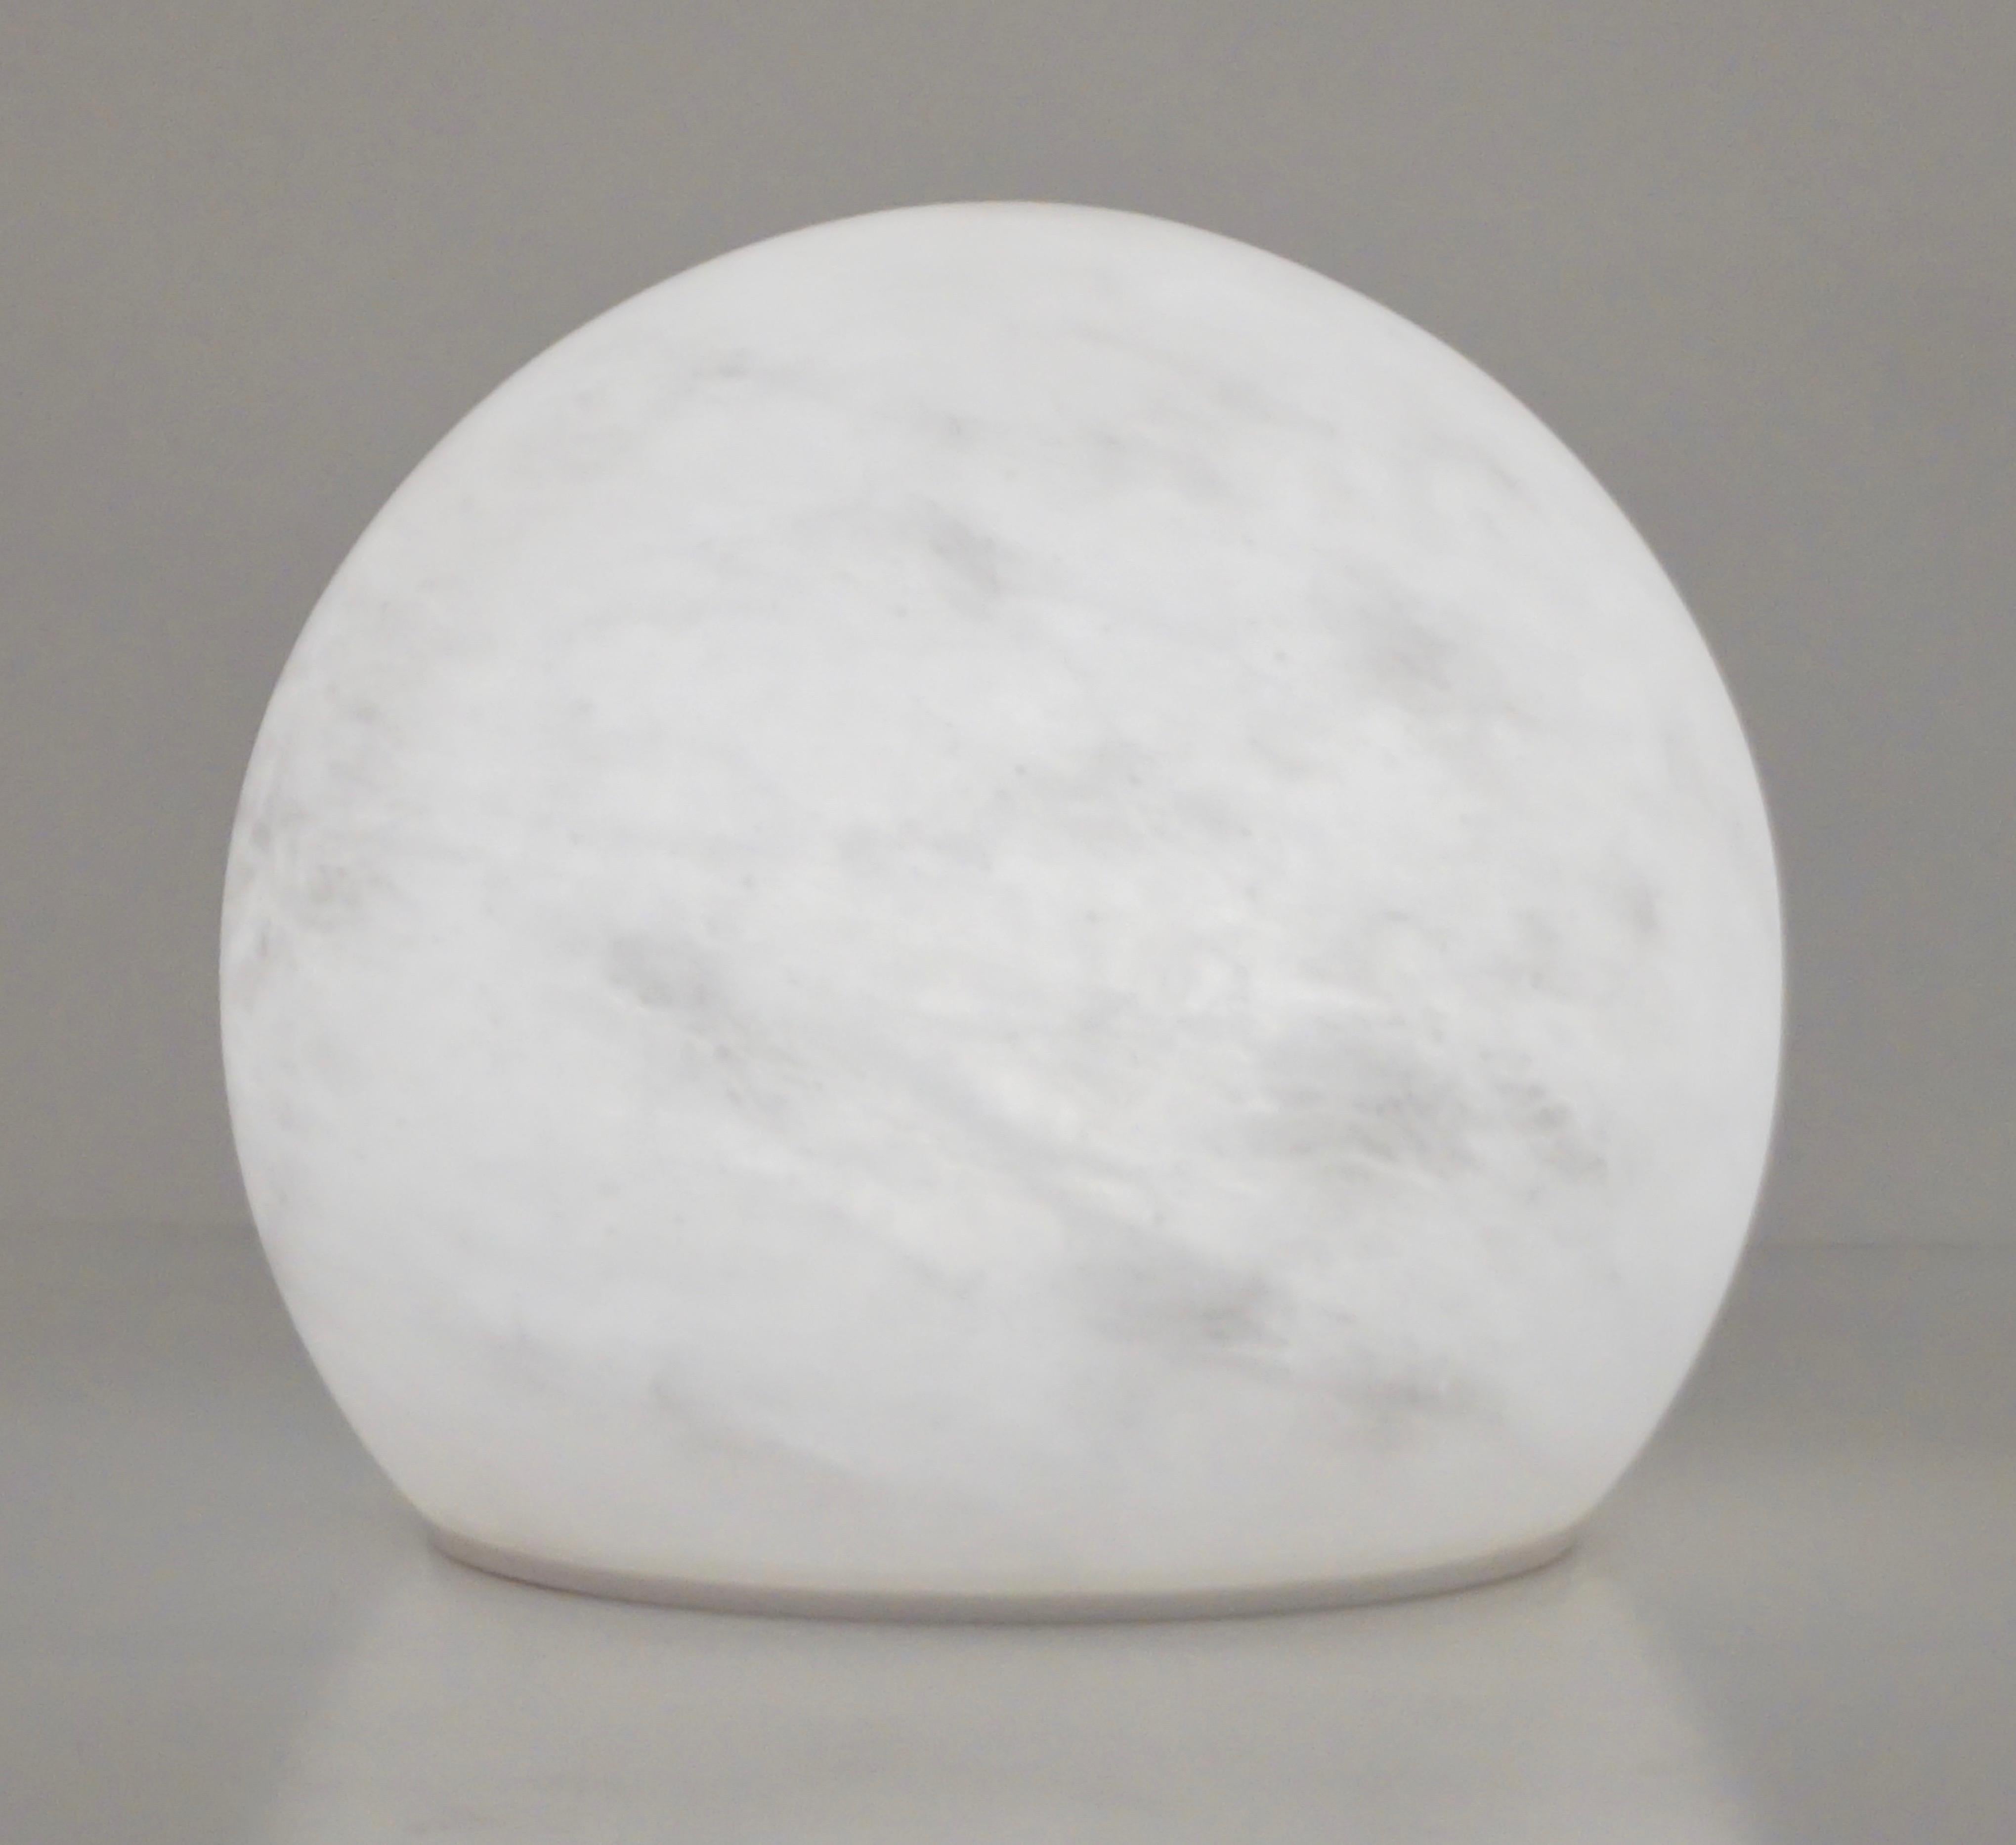 Organic Modern Bespoke Italian Minimalist White Alabaster Moon Wireless Round Table/Desk Lamp For Sale